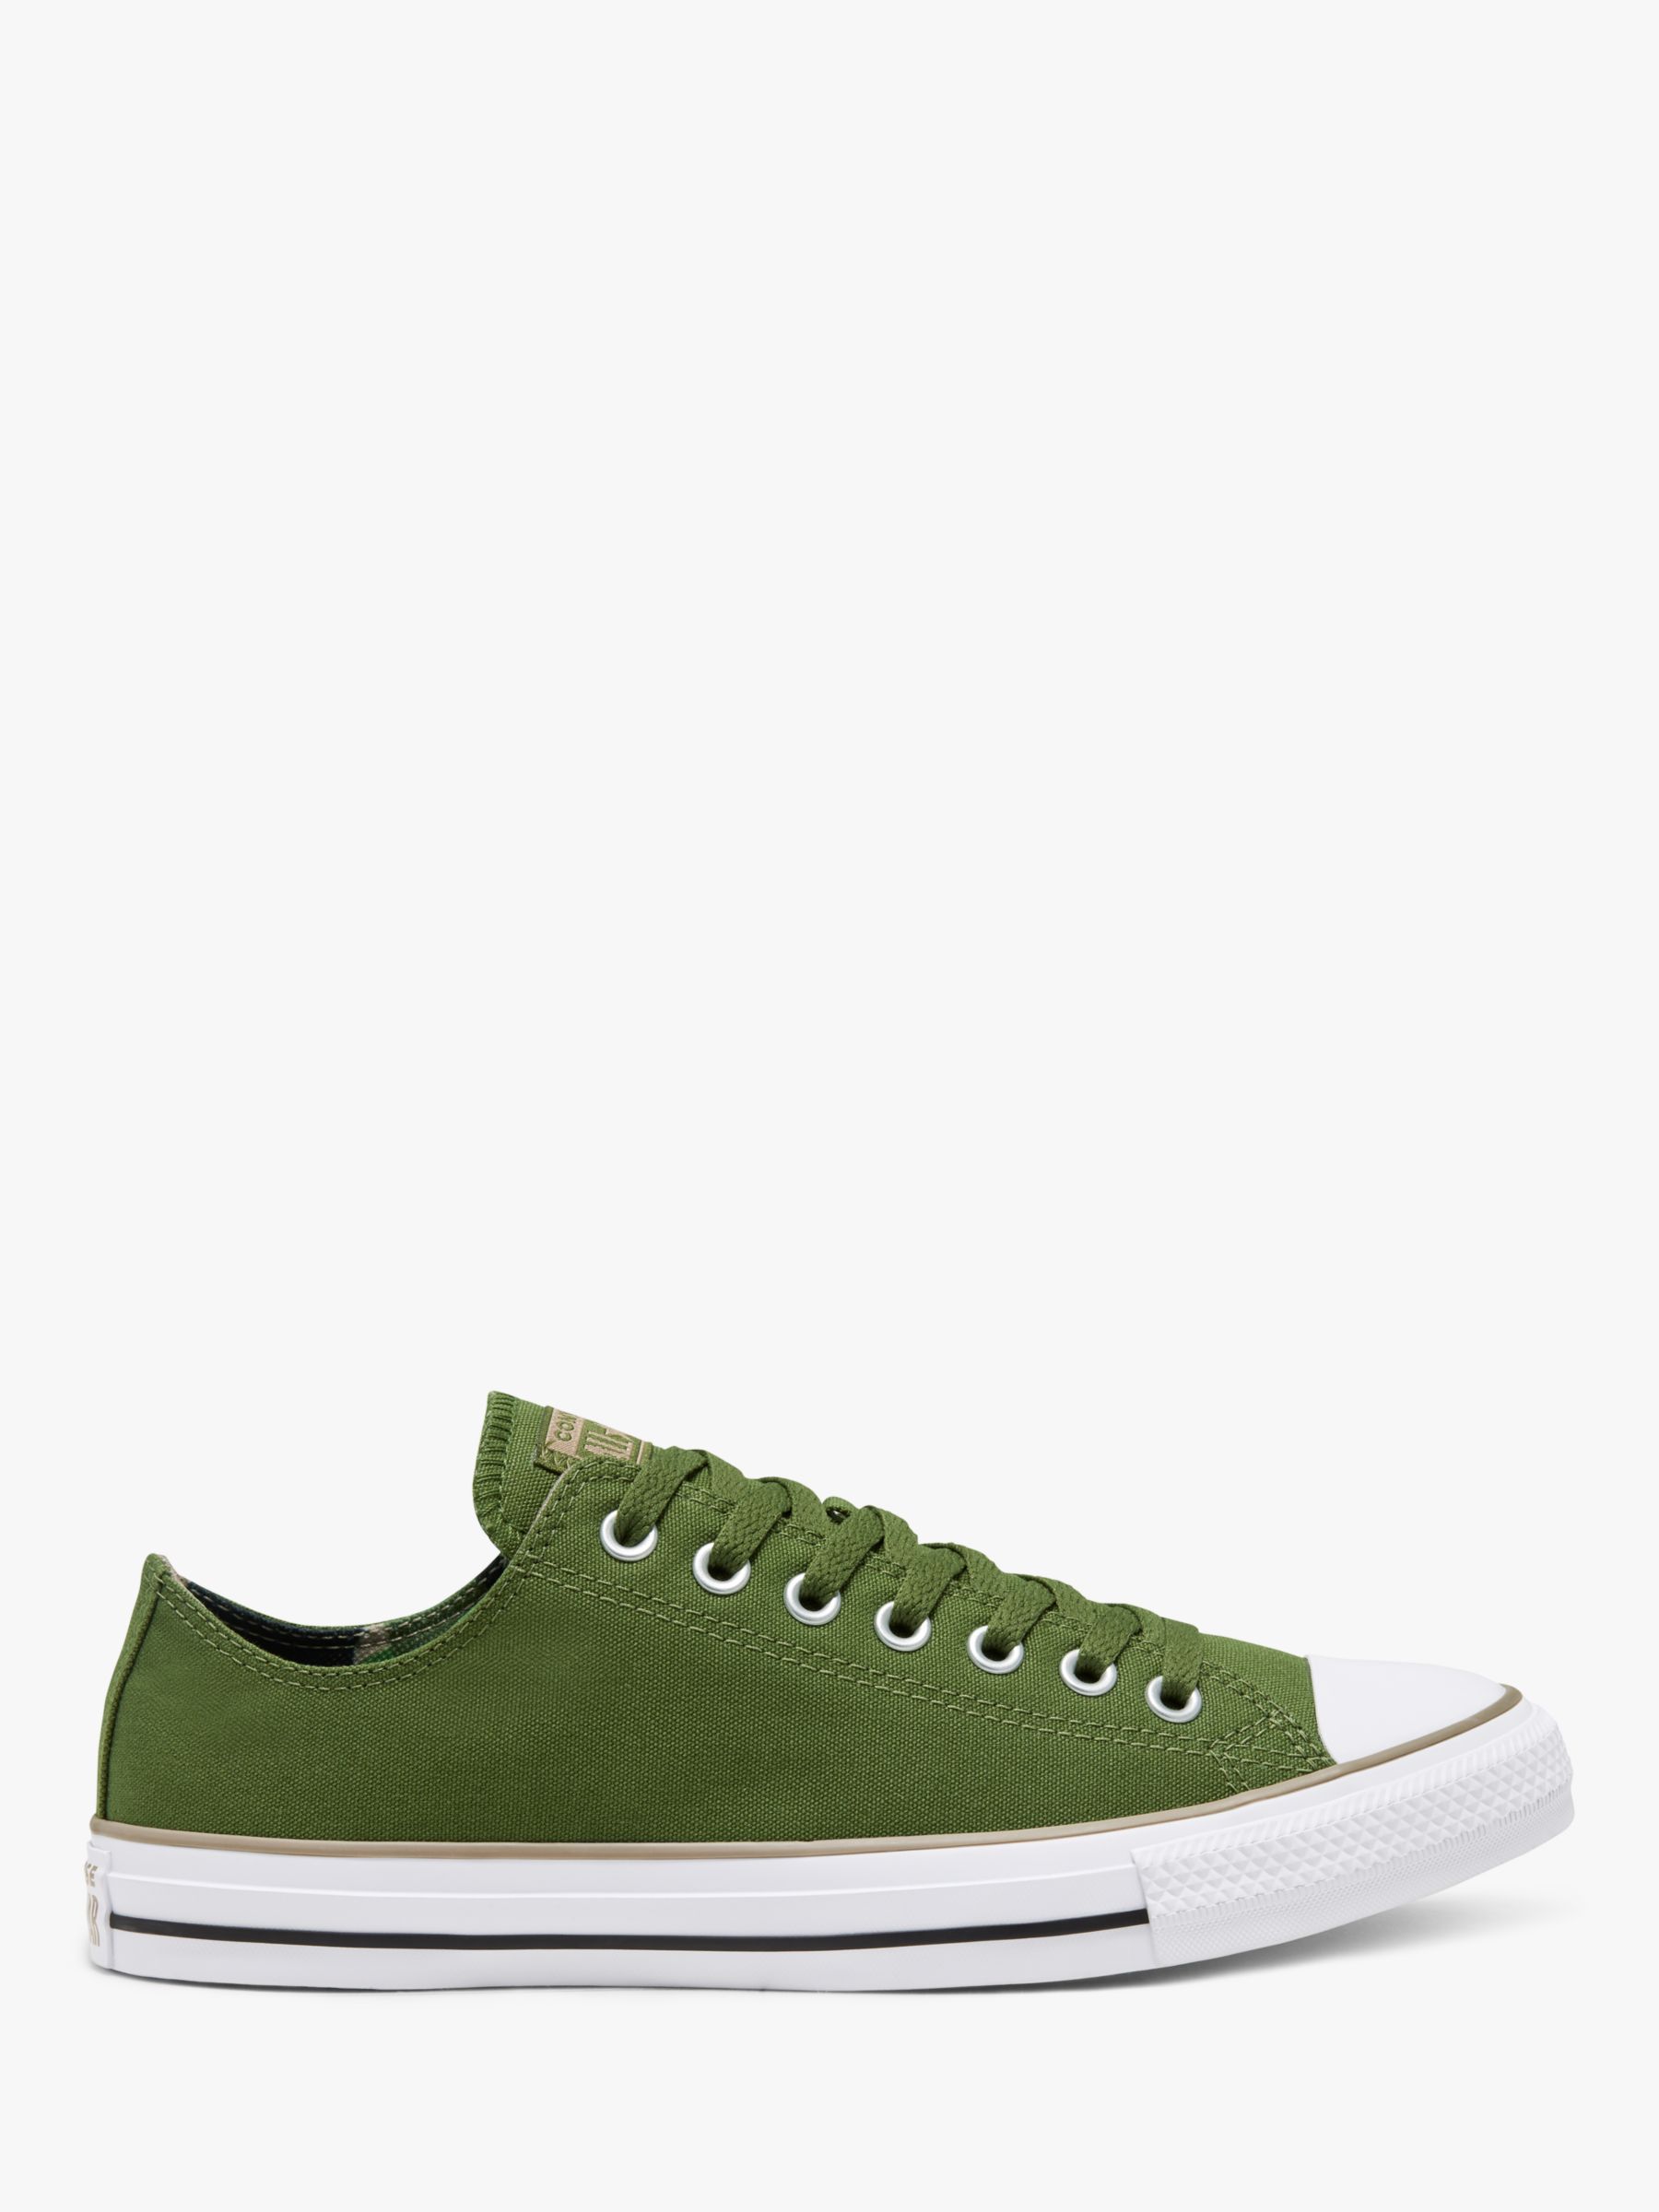 khaki green converse